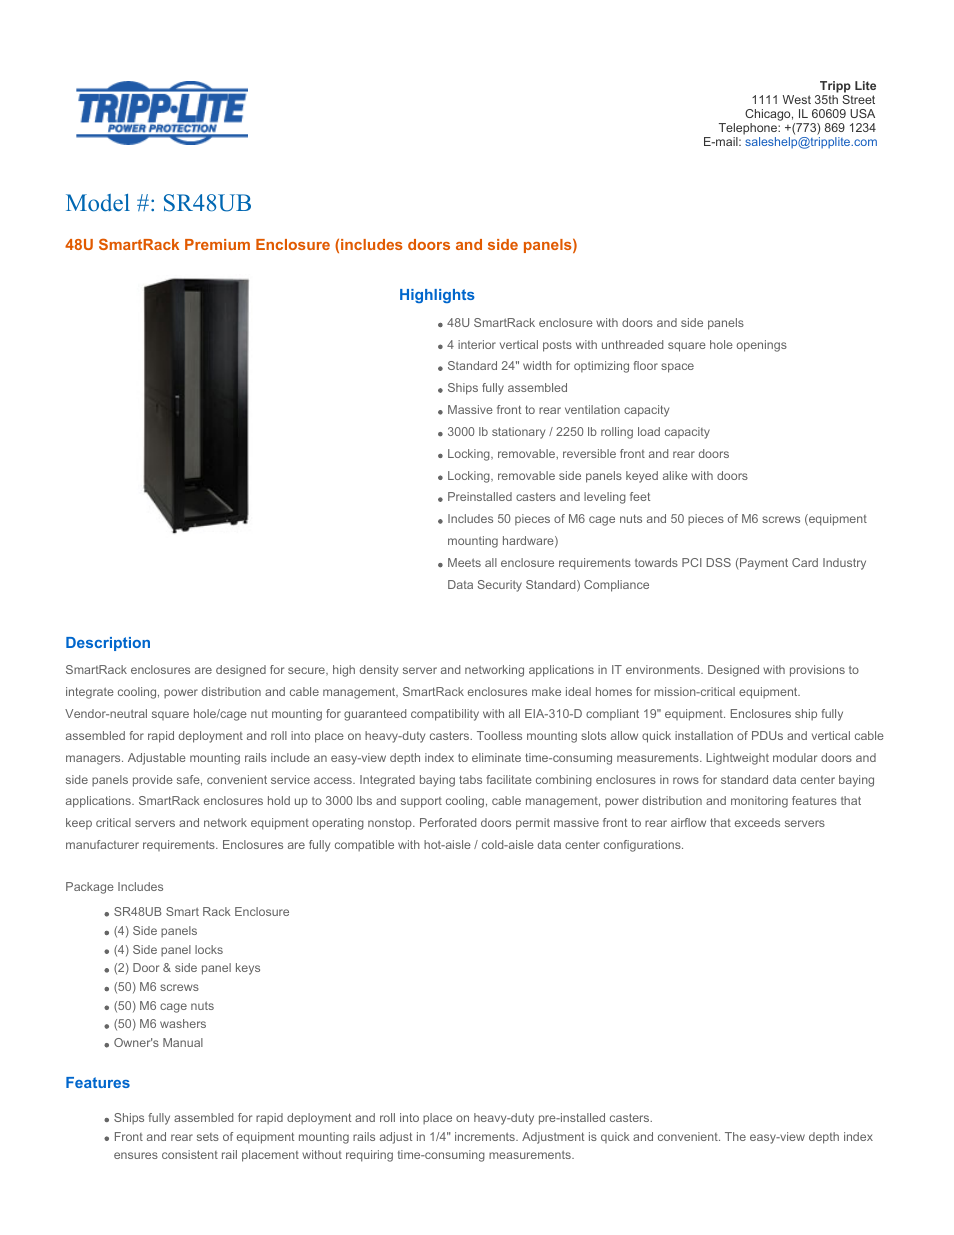 48U SmartRack Premium Enclosure SR48UB